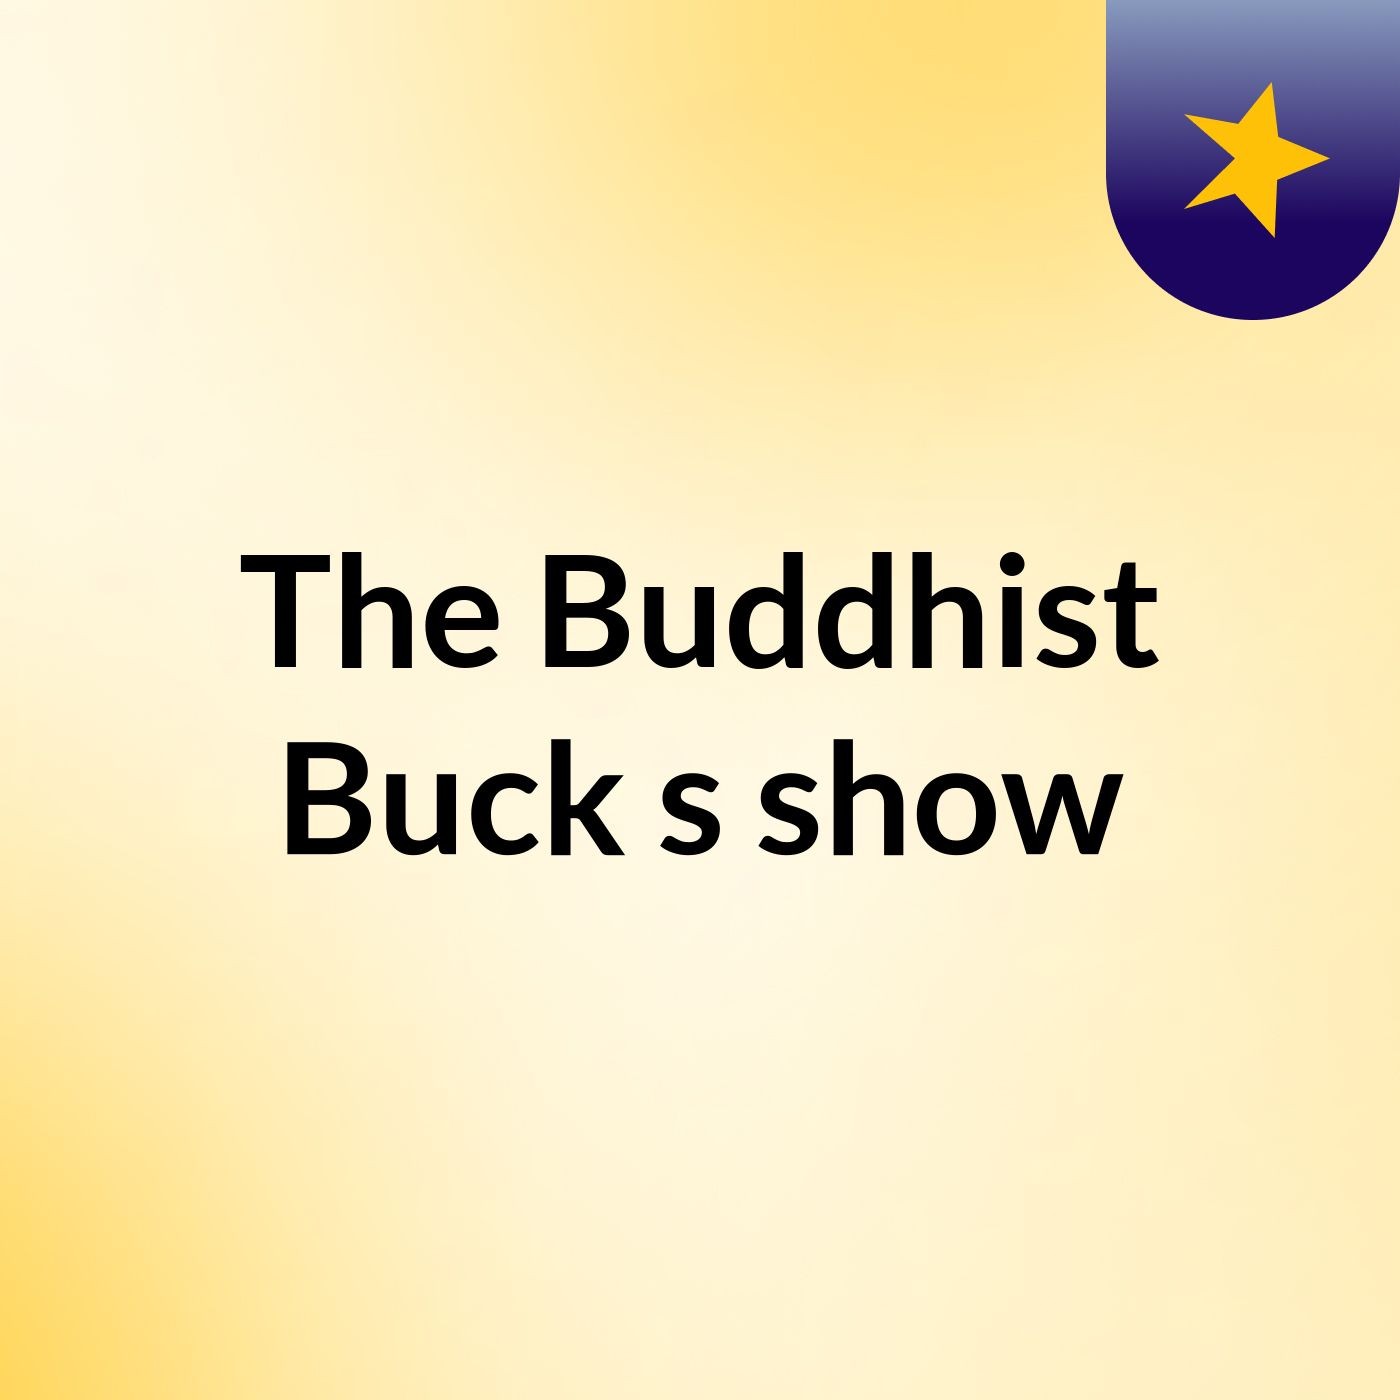 The Buddhist Buck's show